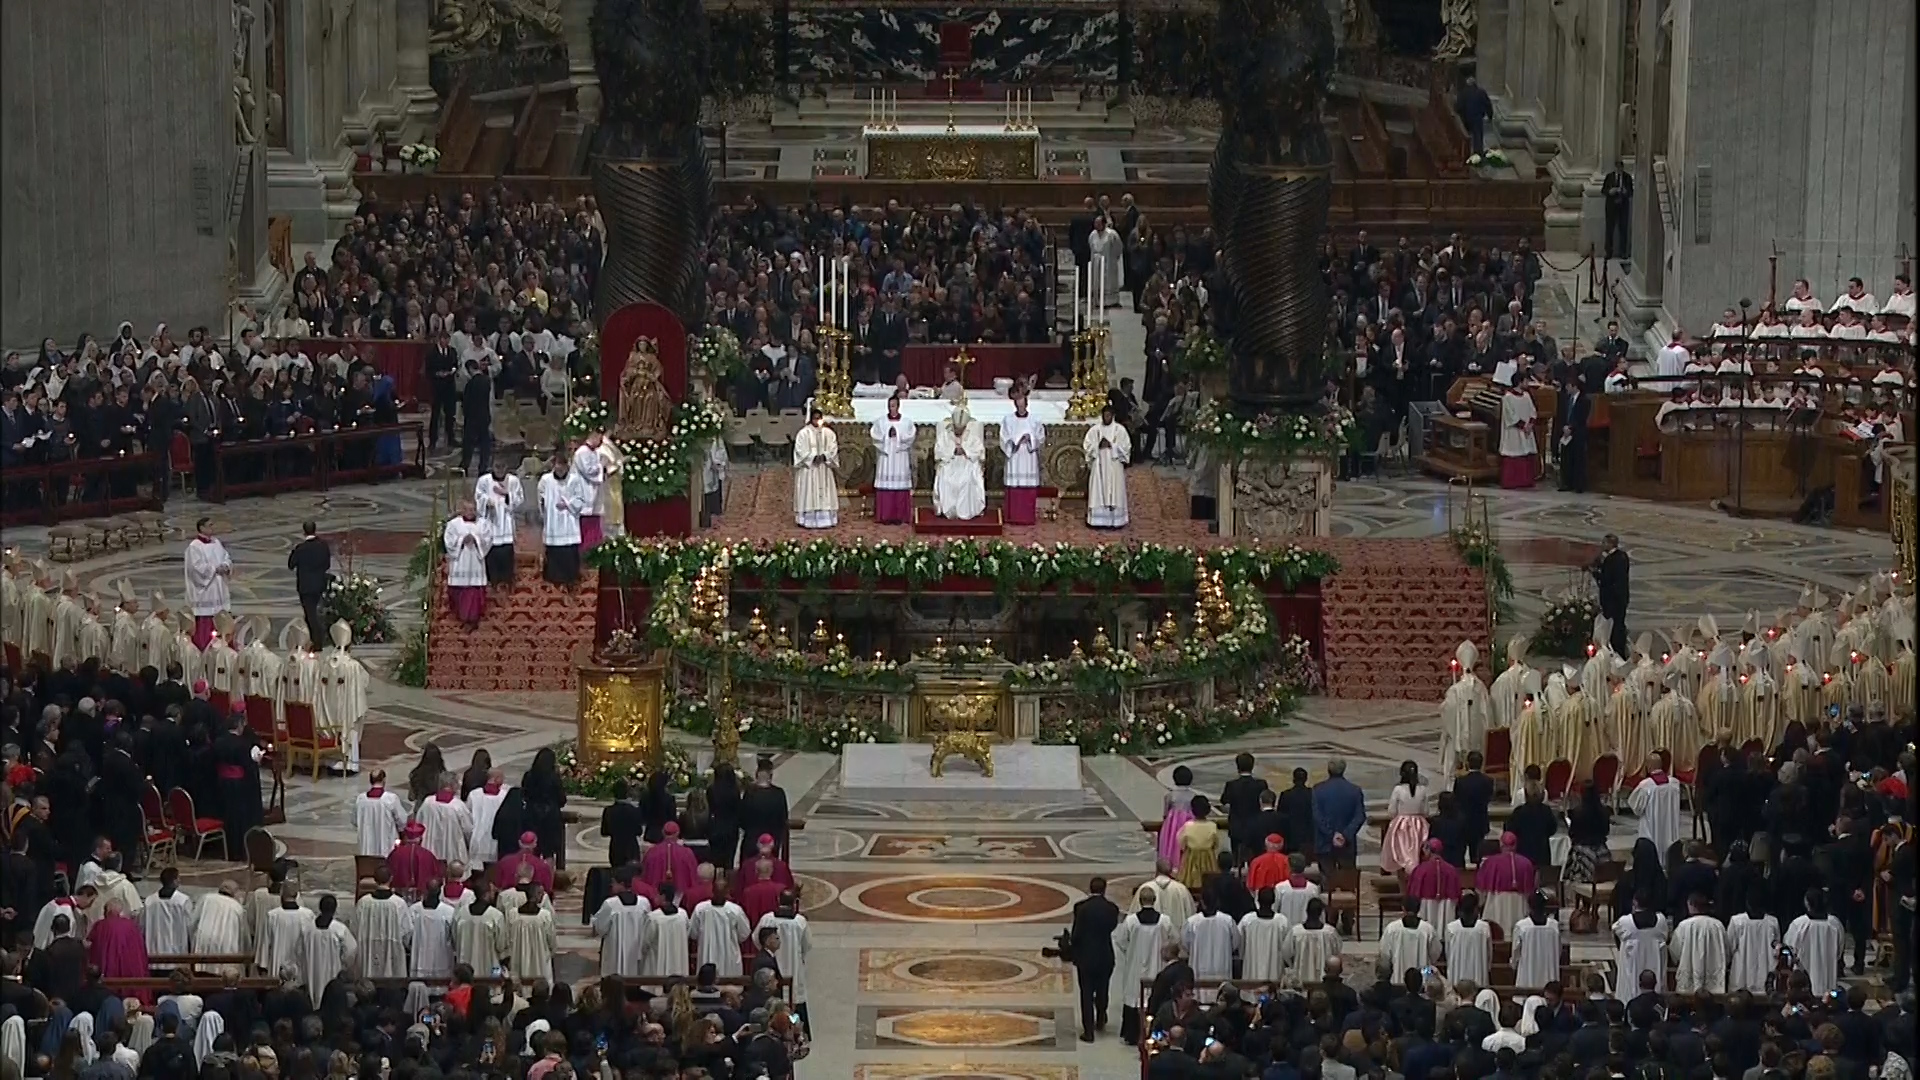 High altar in St. Peter's fully illuminated for Easter Vigil.